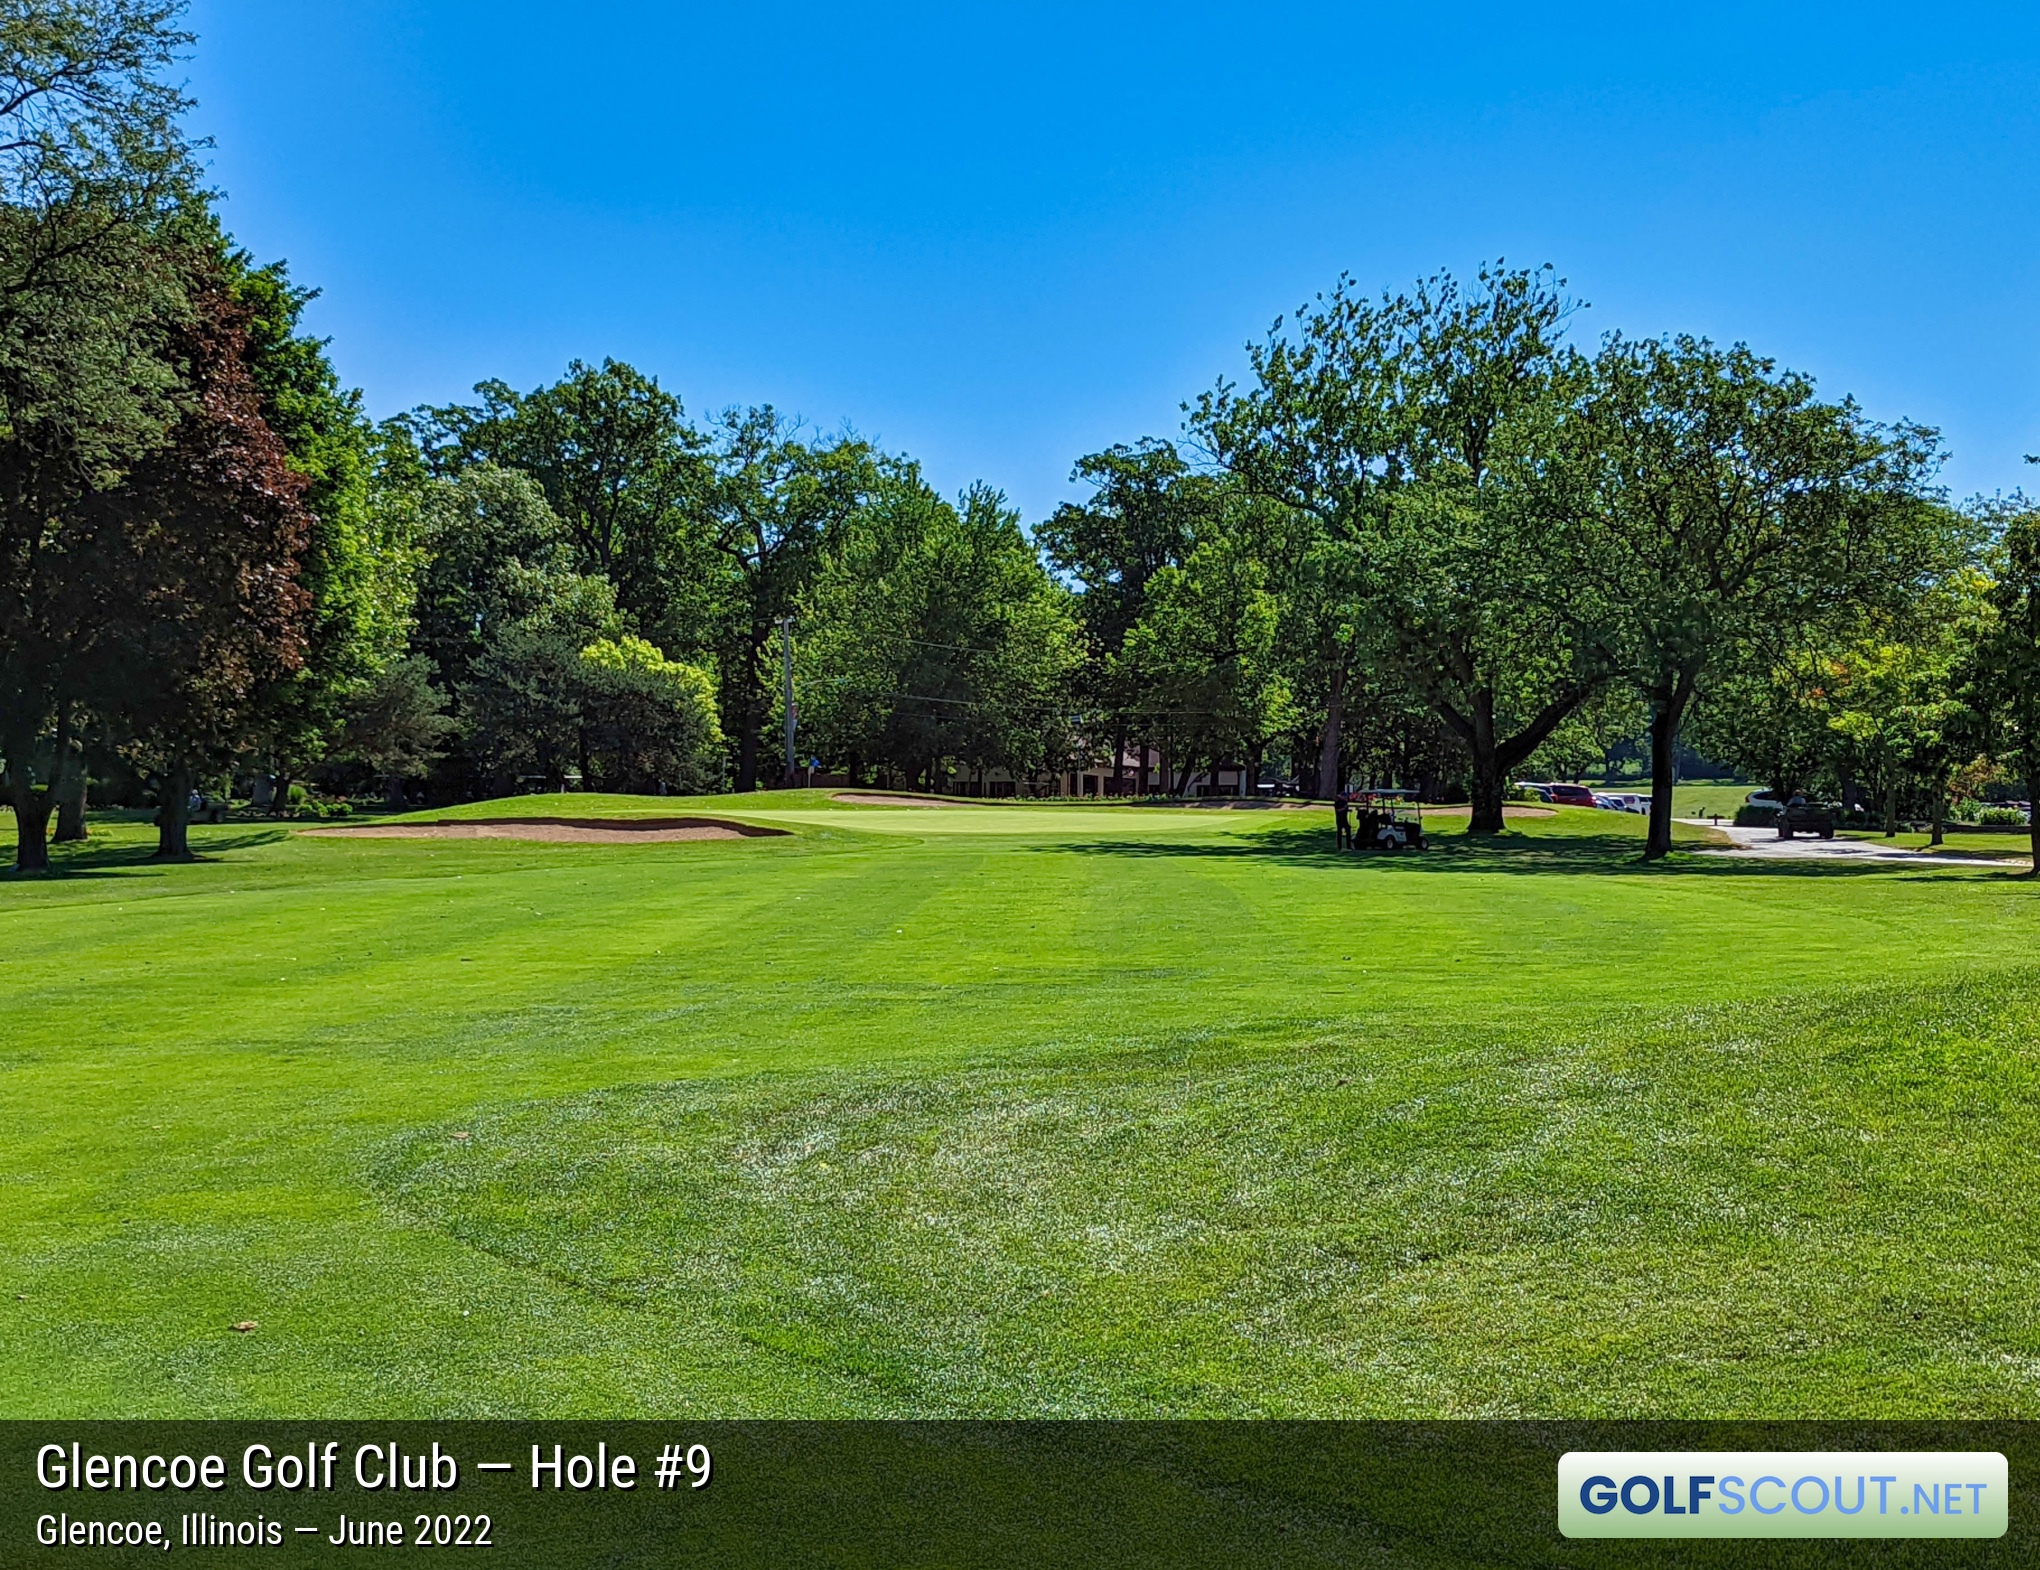 Photo of hole #9 at Glencoe Golf Club in Glencoe, Illinois. 